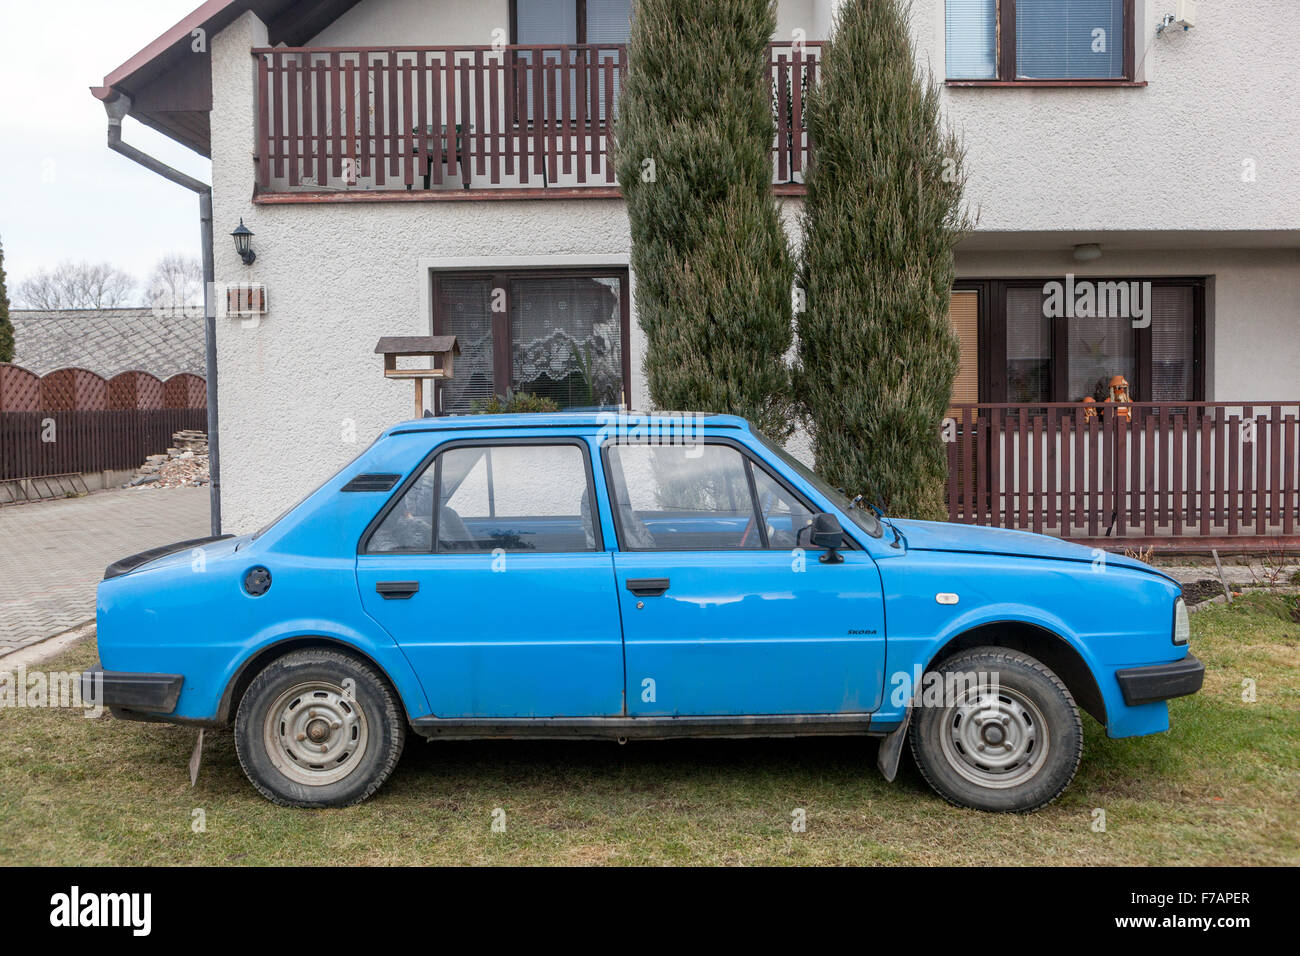 Skoda car from the 1980s, Blue Skoda 120, Czech village, Czech Republic Stock Photo